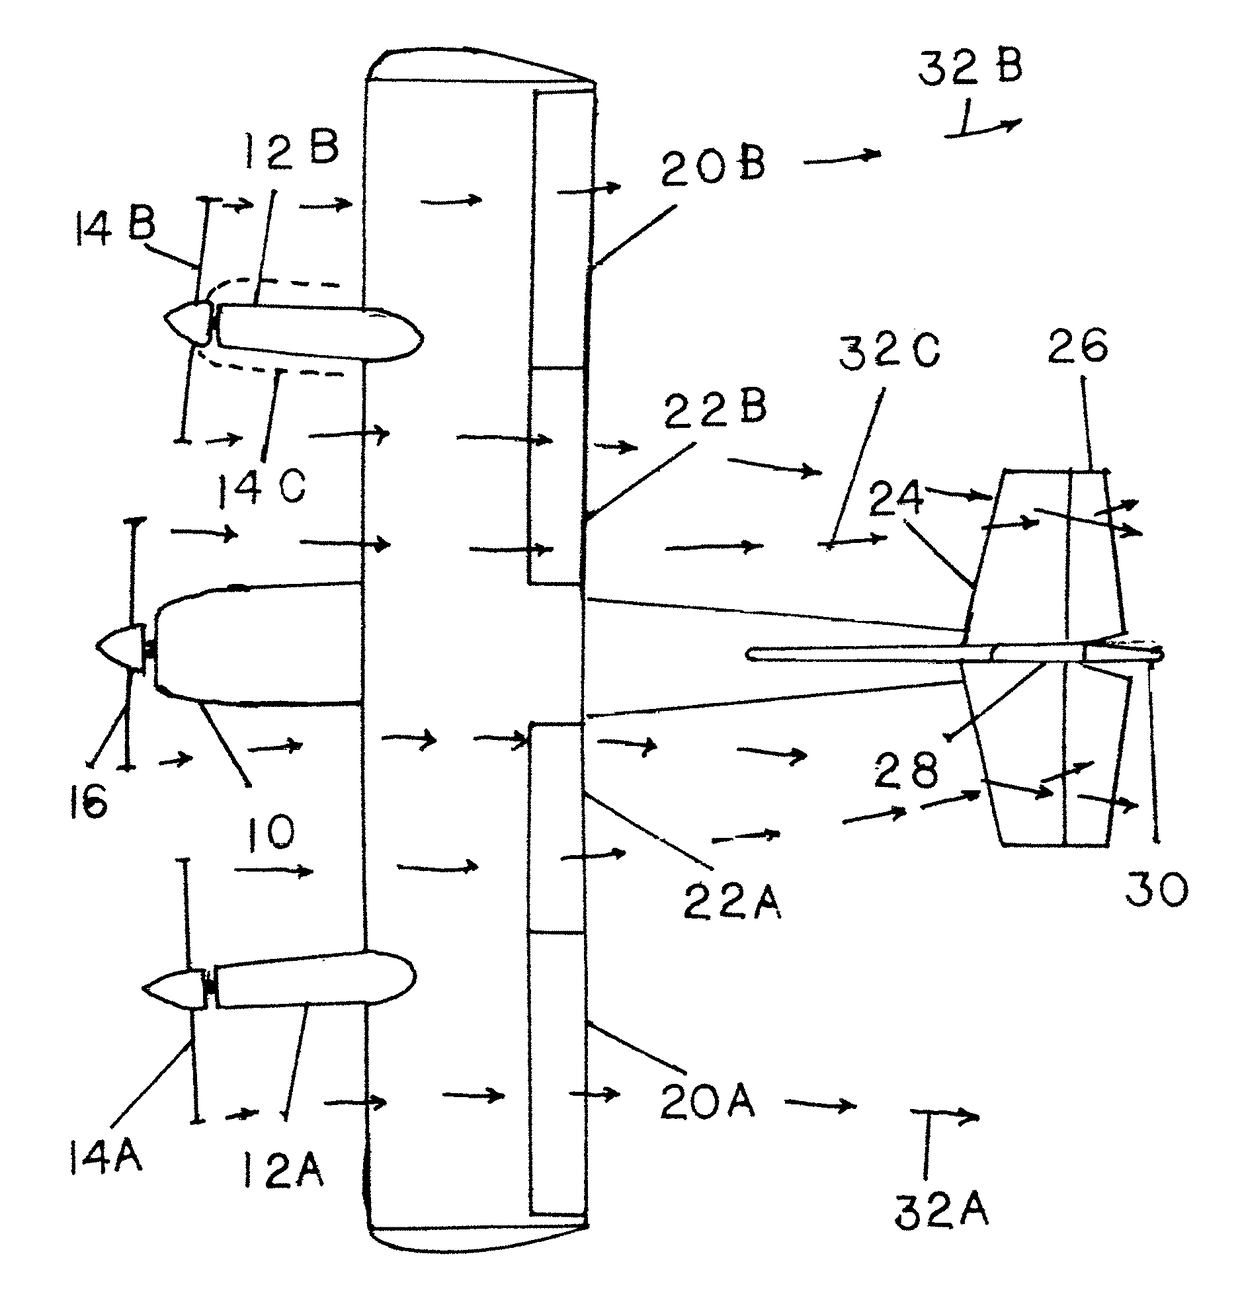 Full-segregated thrust hybrid propulsion for airplanes